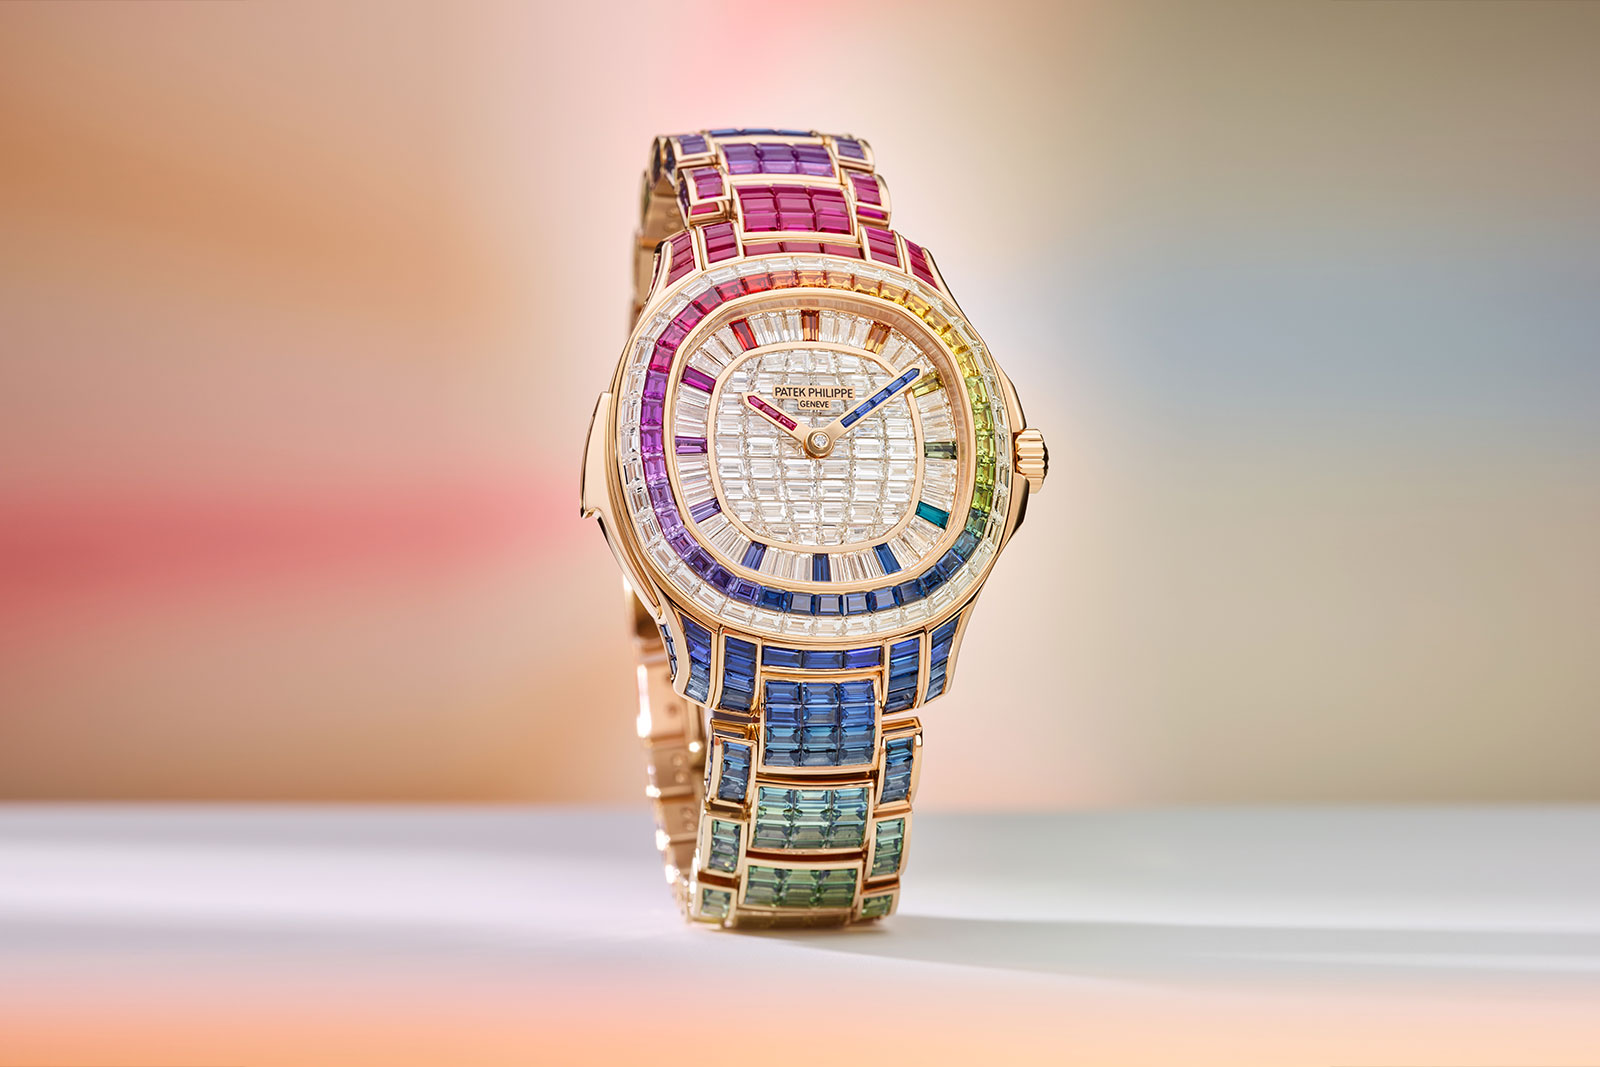 Luxury Watch Brands - Patek Philippe: The Epitome of Luxury